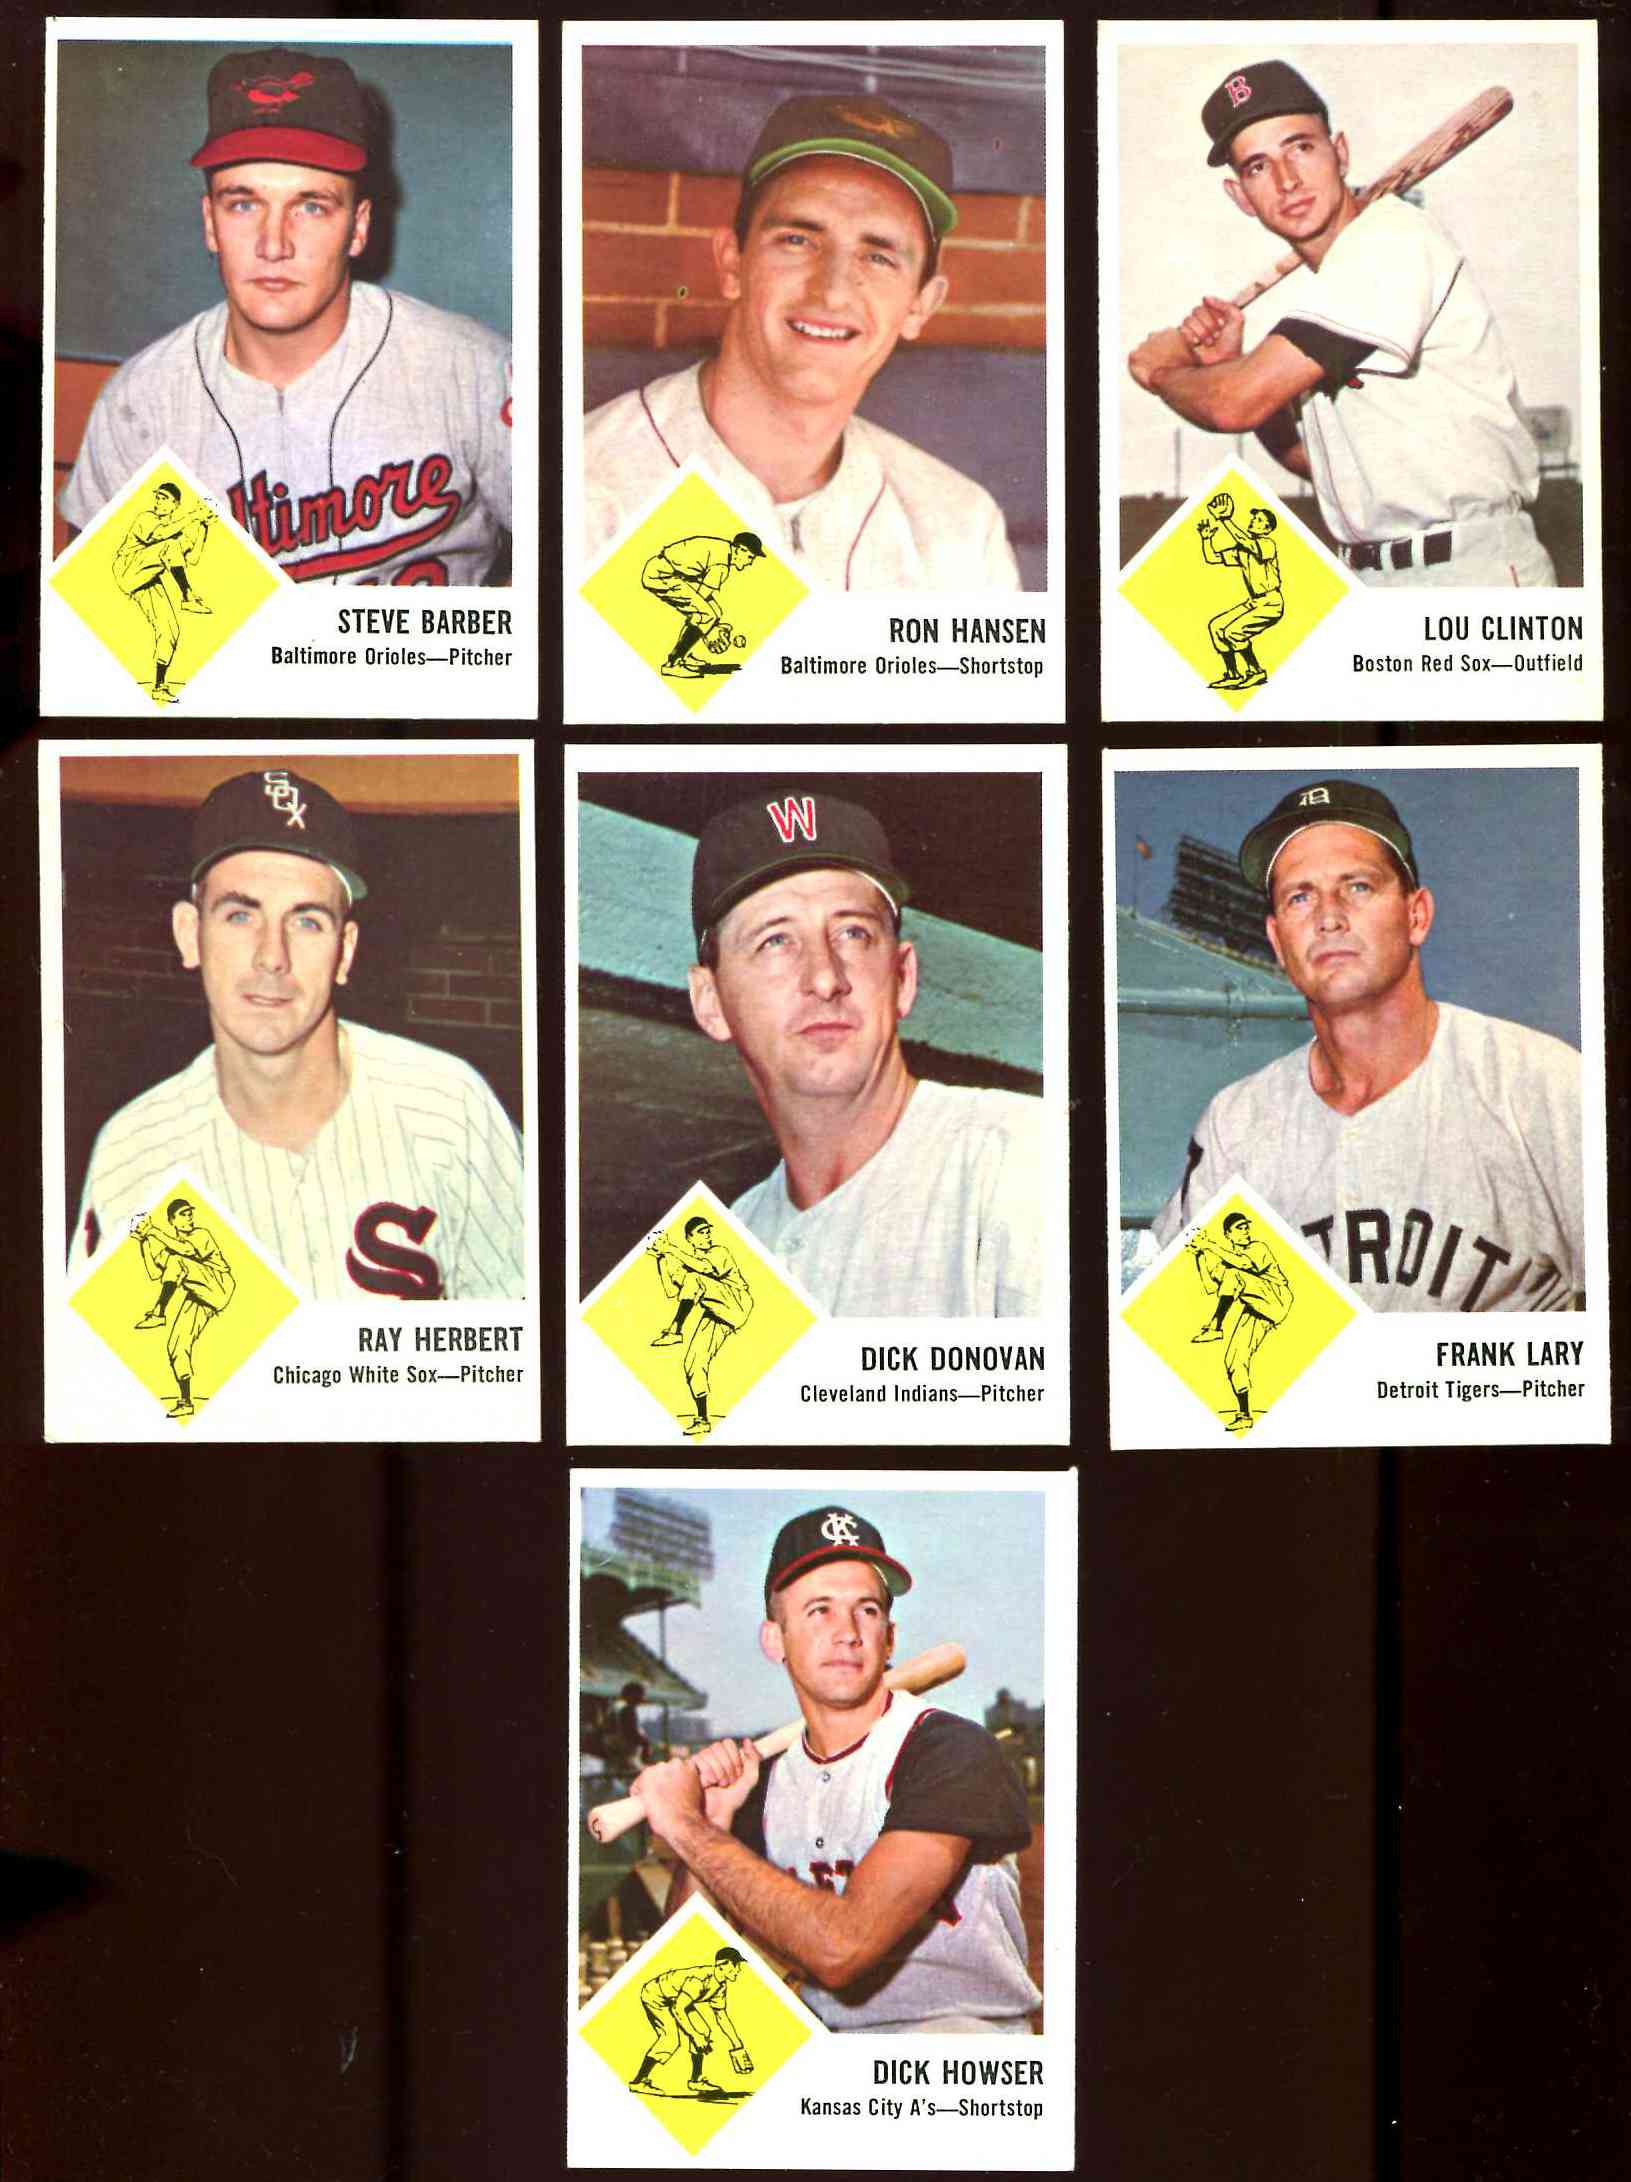 1963 Fleer #15 Dick Howser (Kansas City A's) Baseball cards value